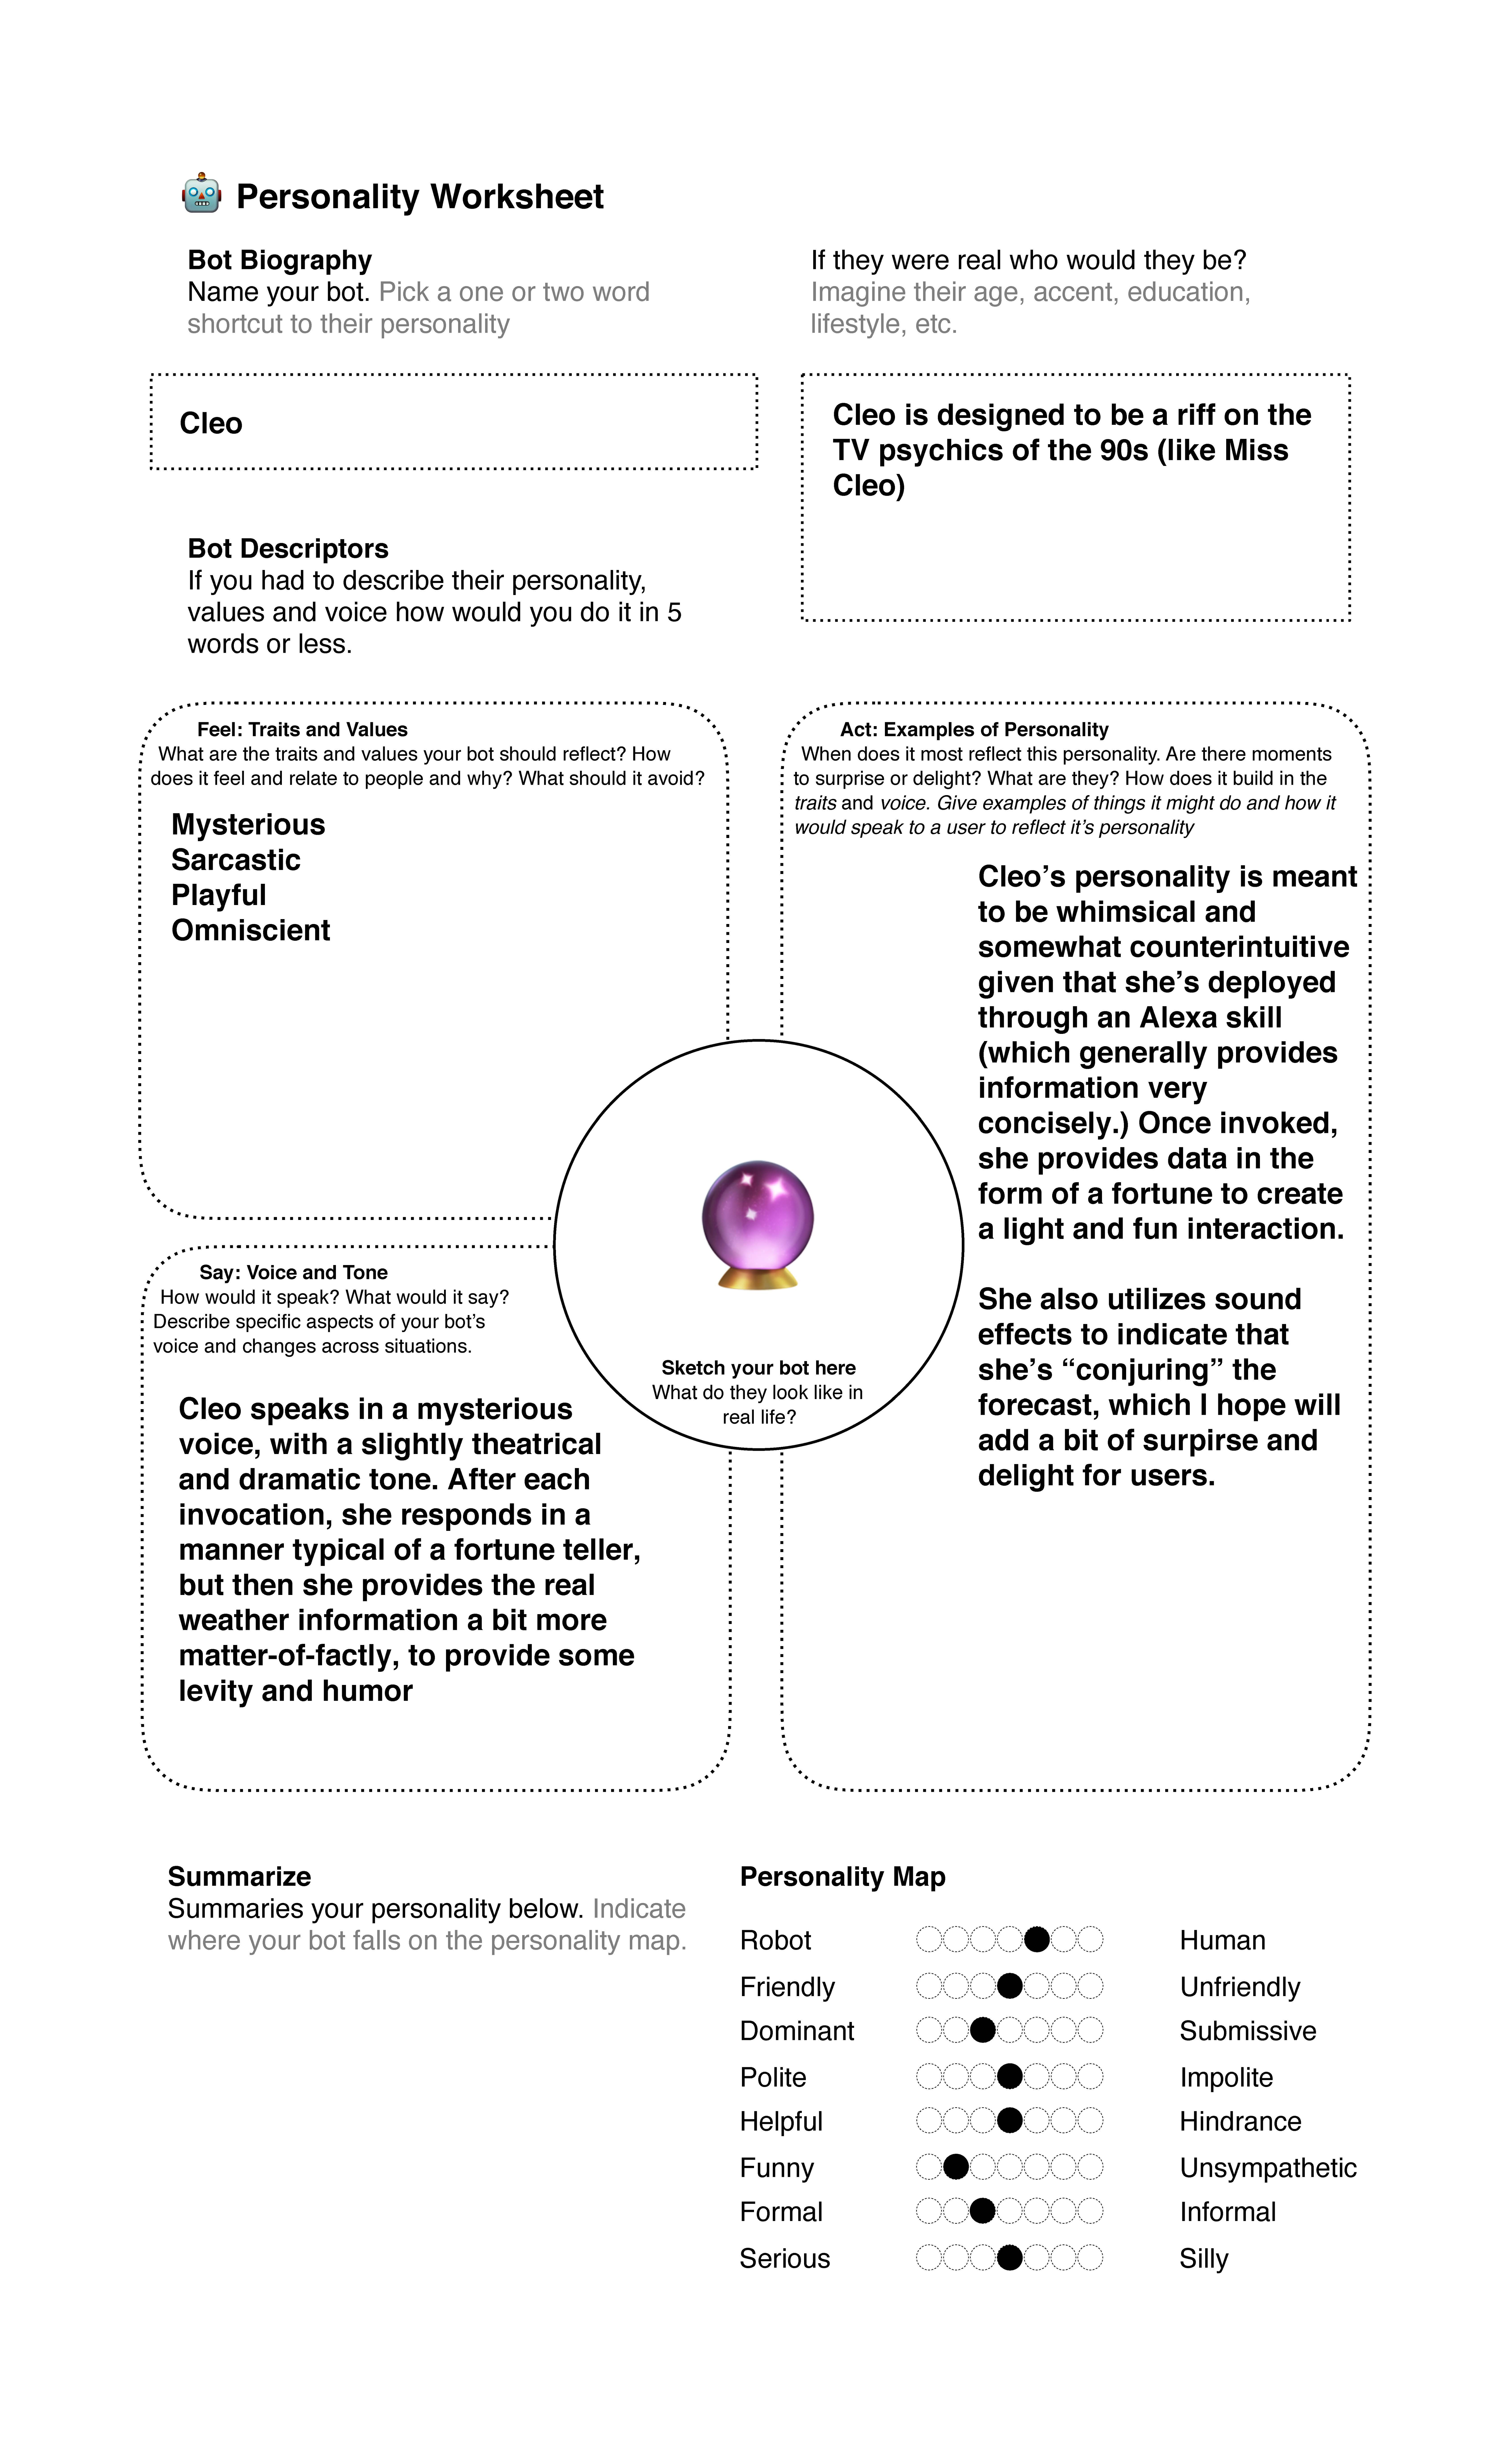 Bot personality worksheet